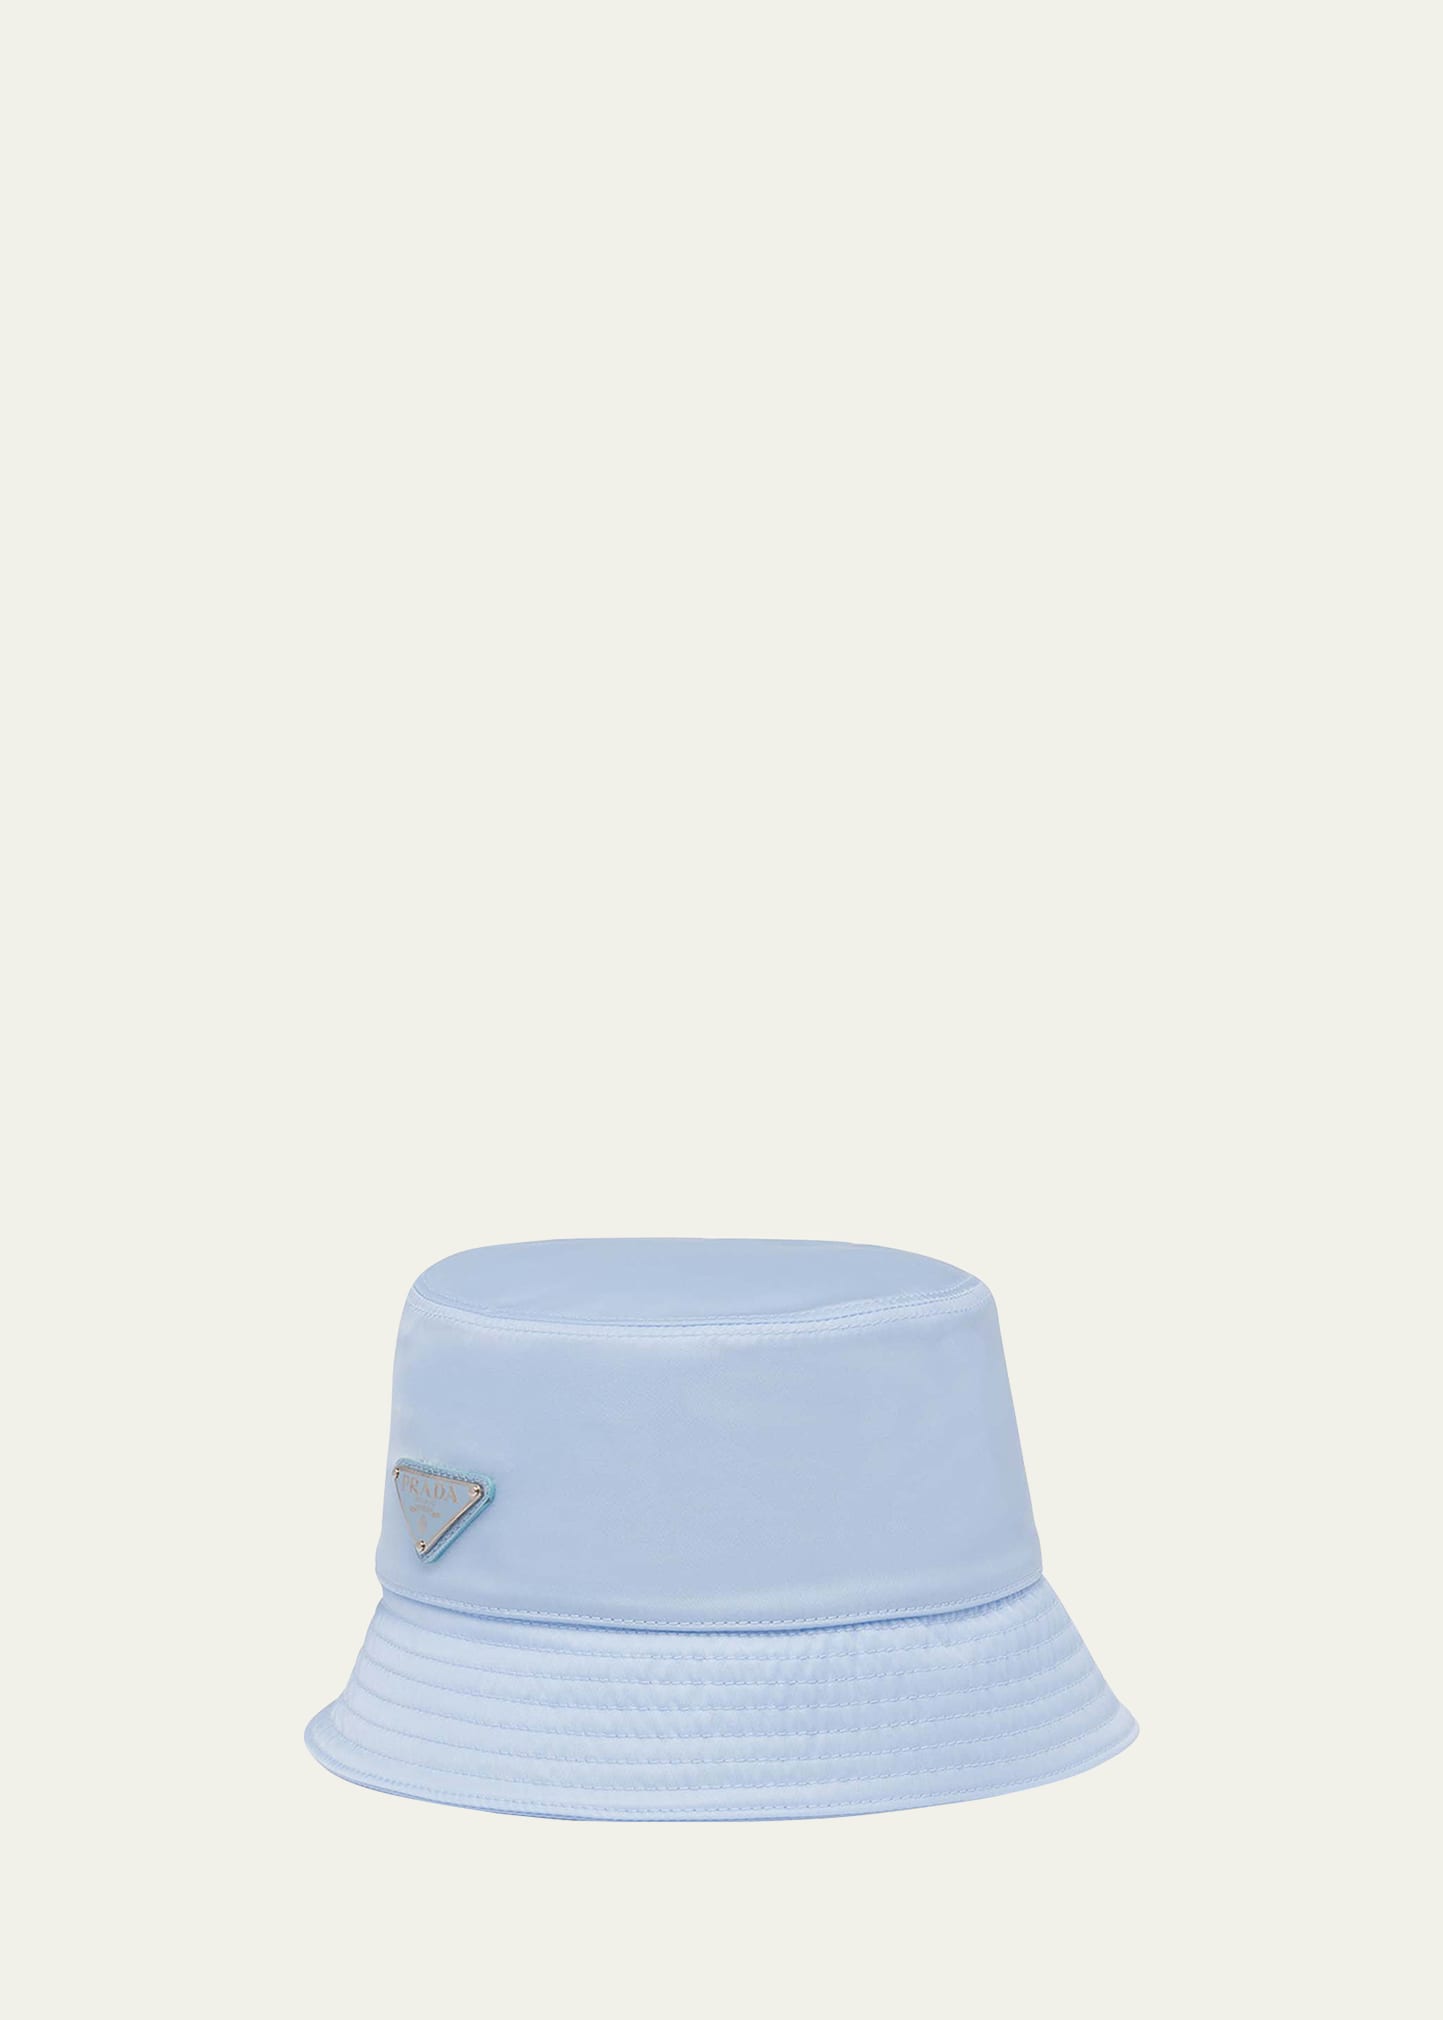 Prada Denim Bucket Hat, Women, Light Blue, Size S